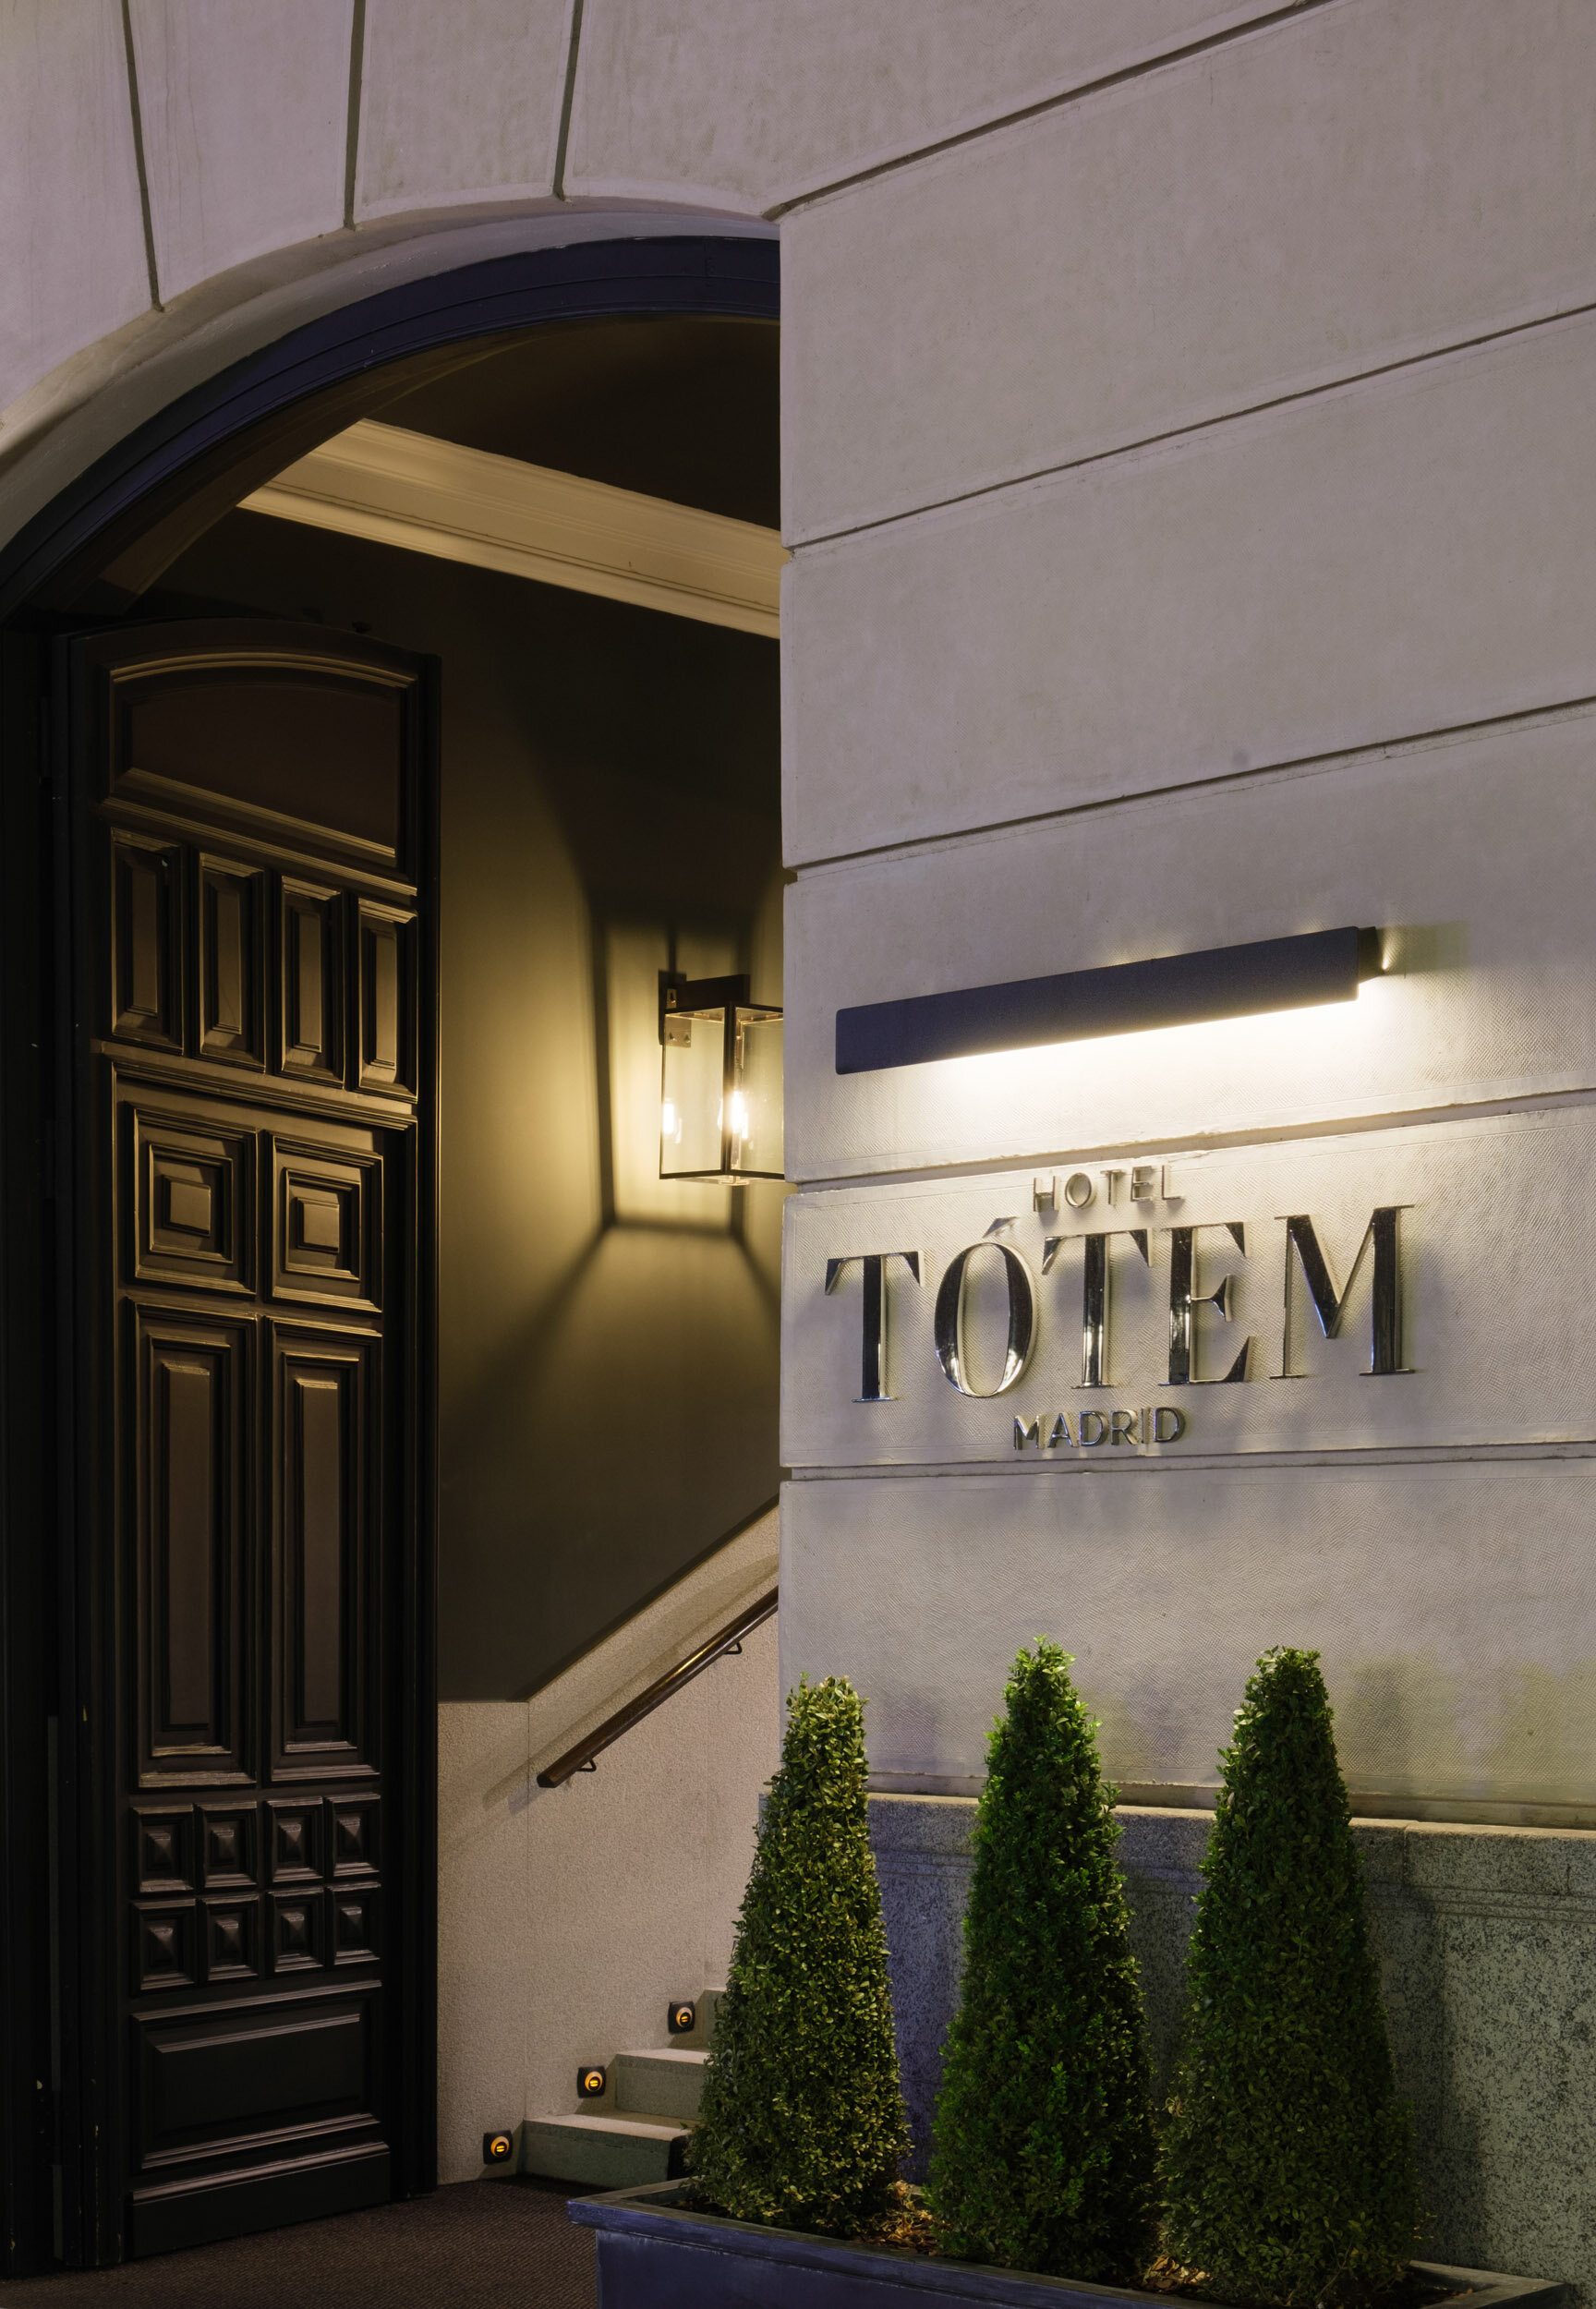 Hotel Totem-spain-Arturo-Lauren-art-sanchez-architecture-interior-photographer-25.jpg